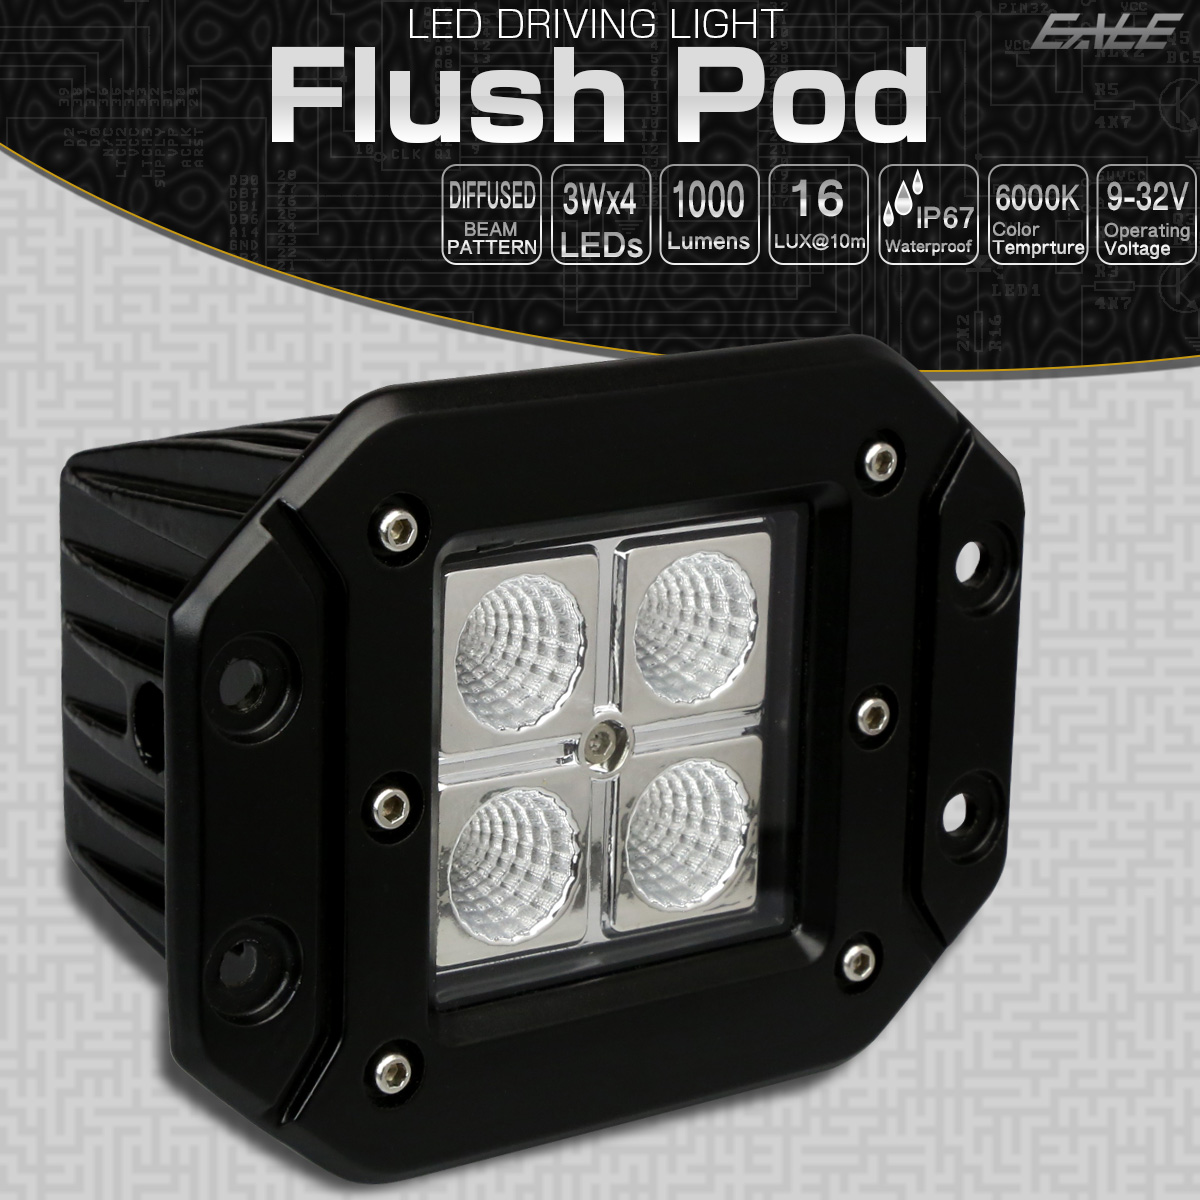 LED ドライビングランプ Flush Pod 埋め込み型 12W CREE XB-D 汎用 フォグランプ バックランプ 作業灯 ワークライト 12V/ 24V